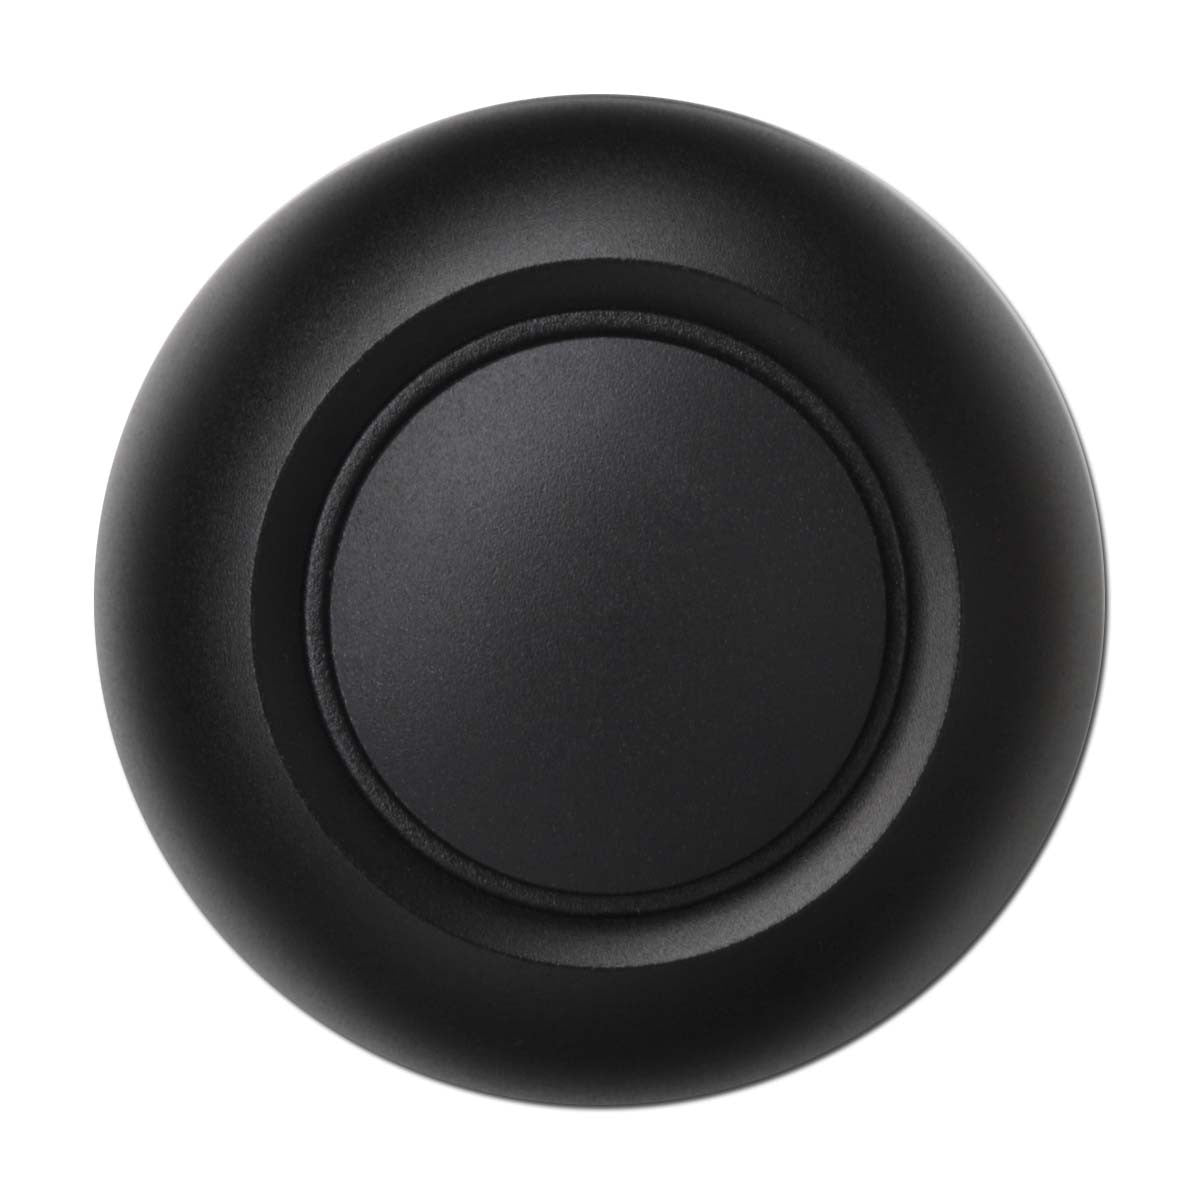 R7 Black Doorbell Button